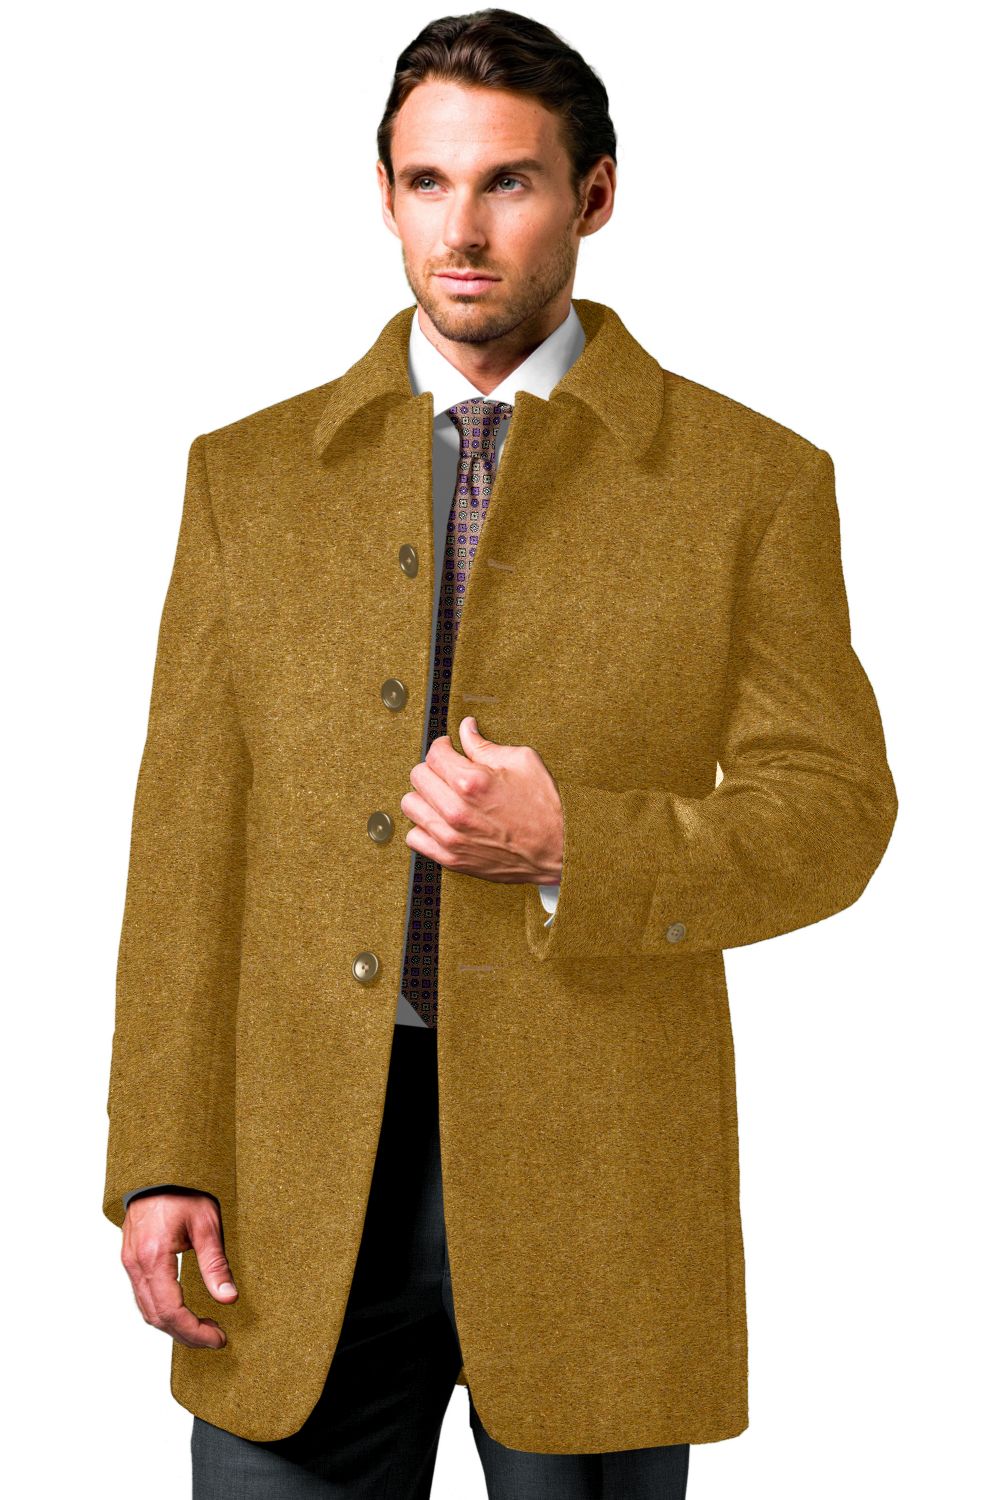 Outerwear Overcoat